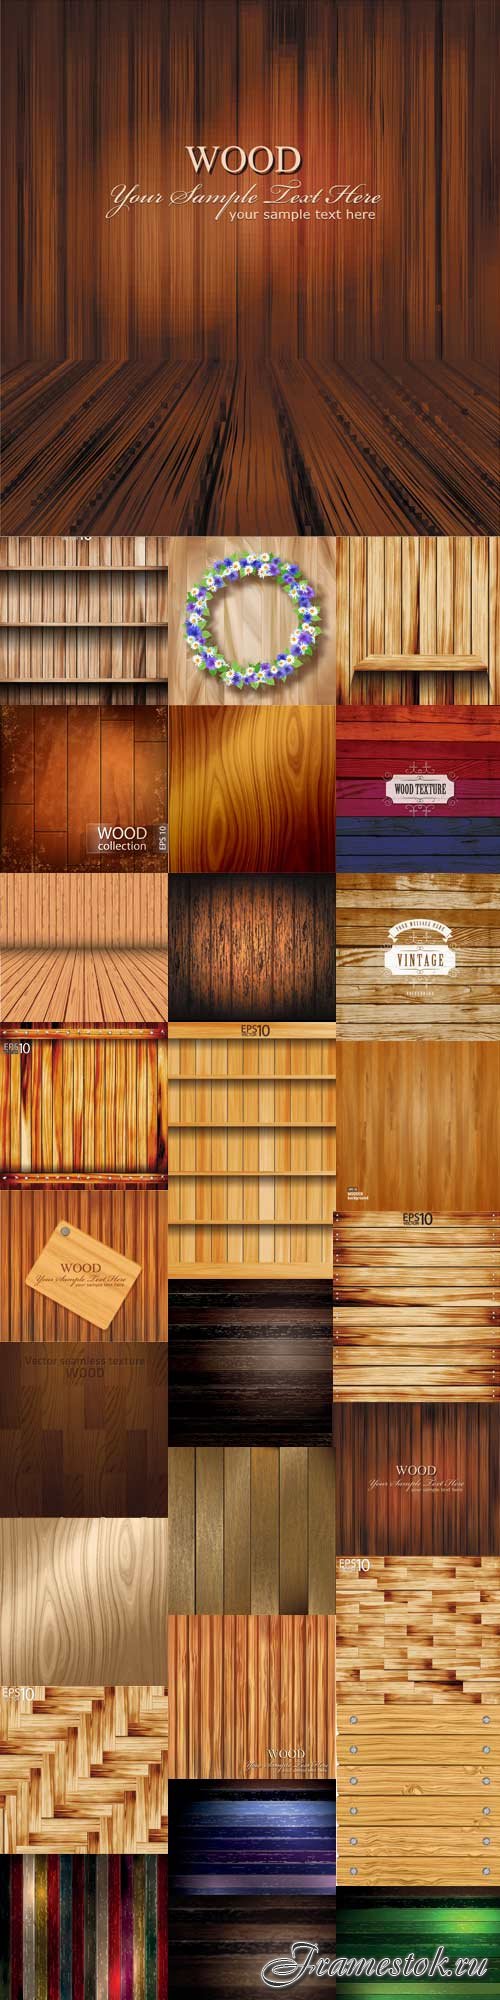 Noble wooden backgrounds vector